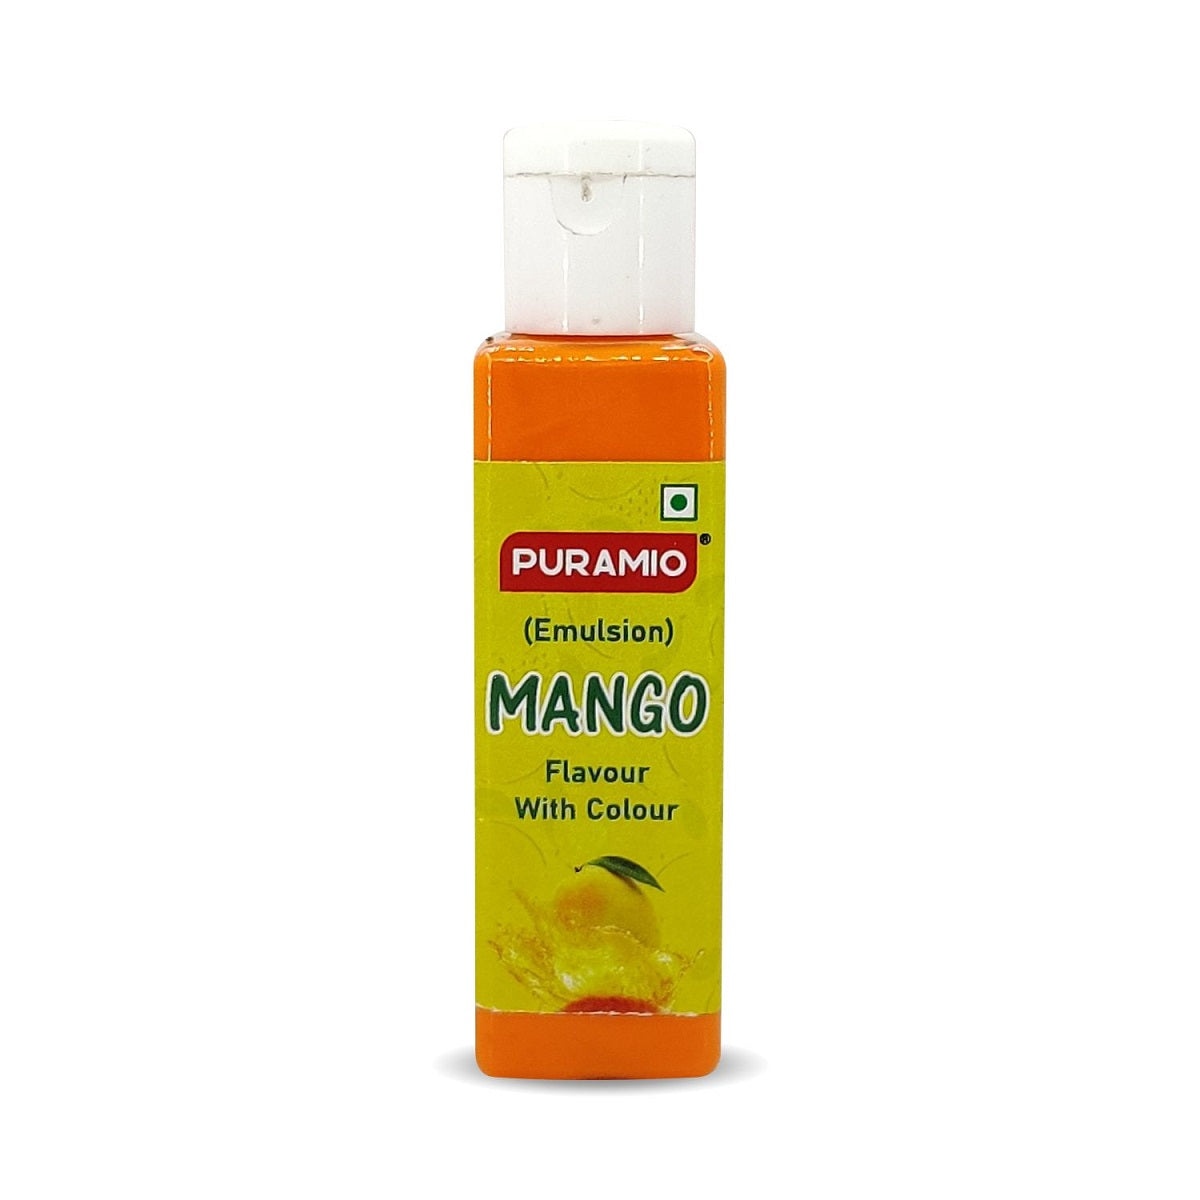 Puramio Mango - Flavour with Colour (Emulsion)